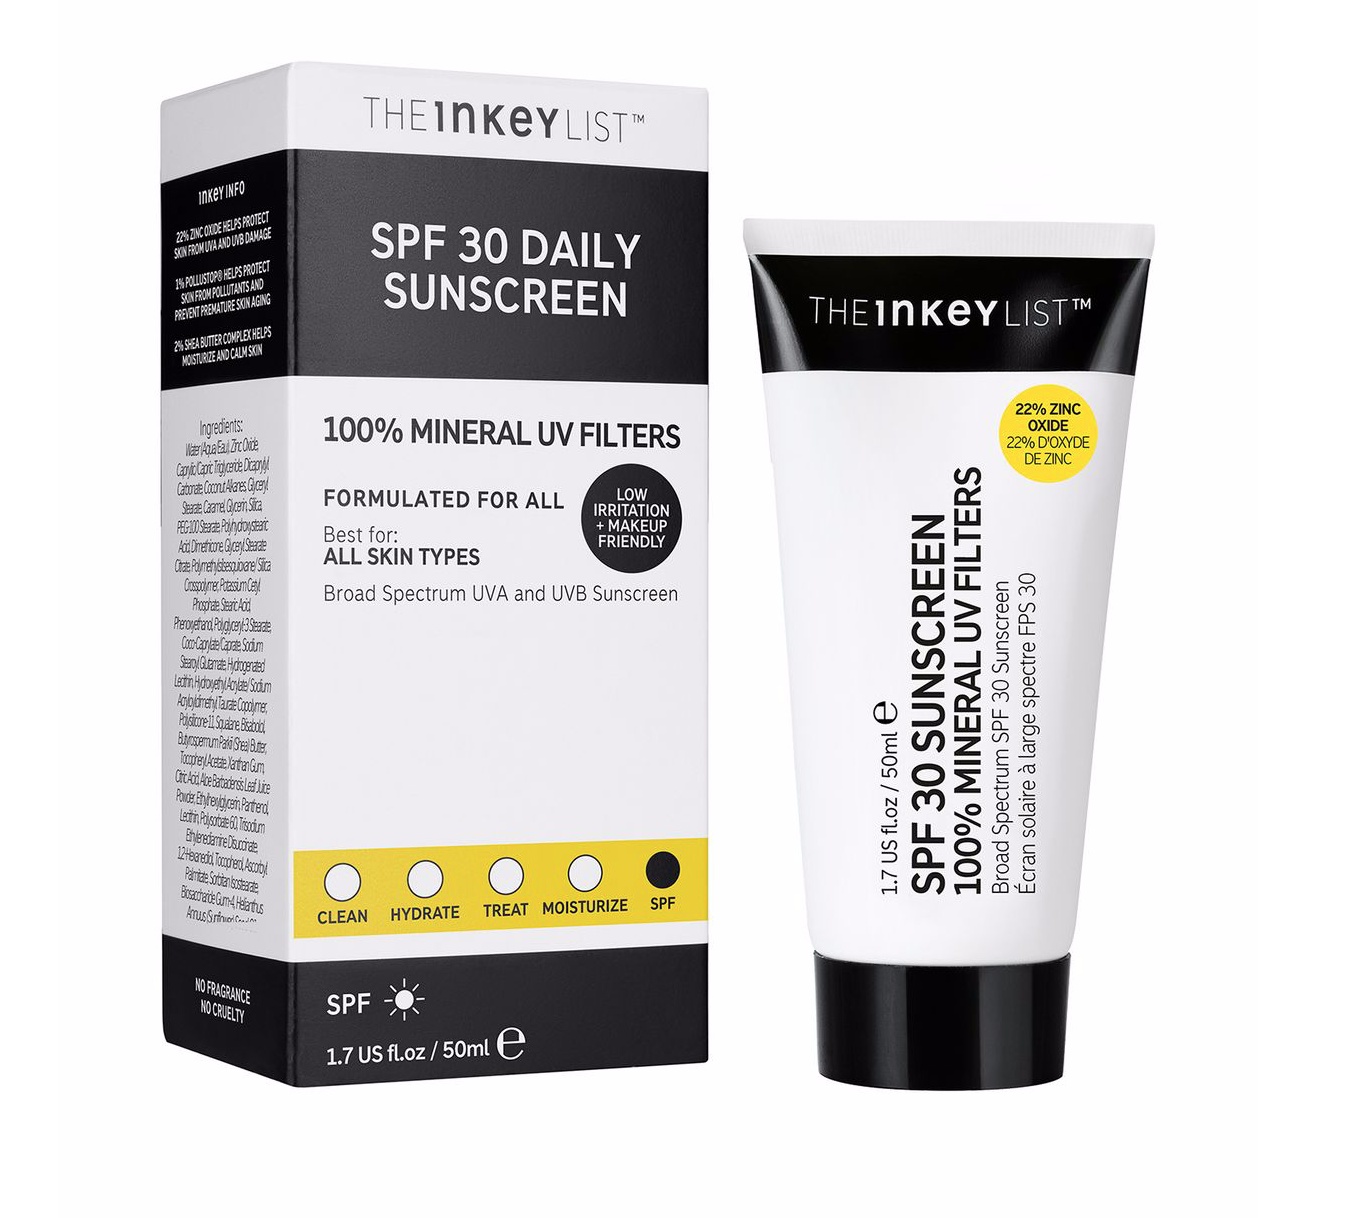 The Inkey List Spf 30 Daily Sunscreen